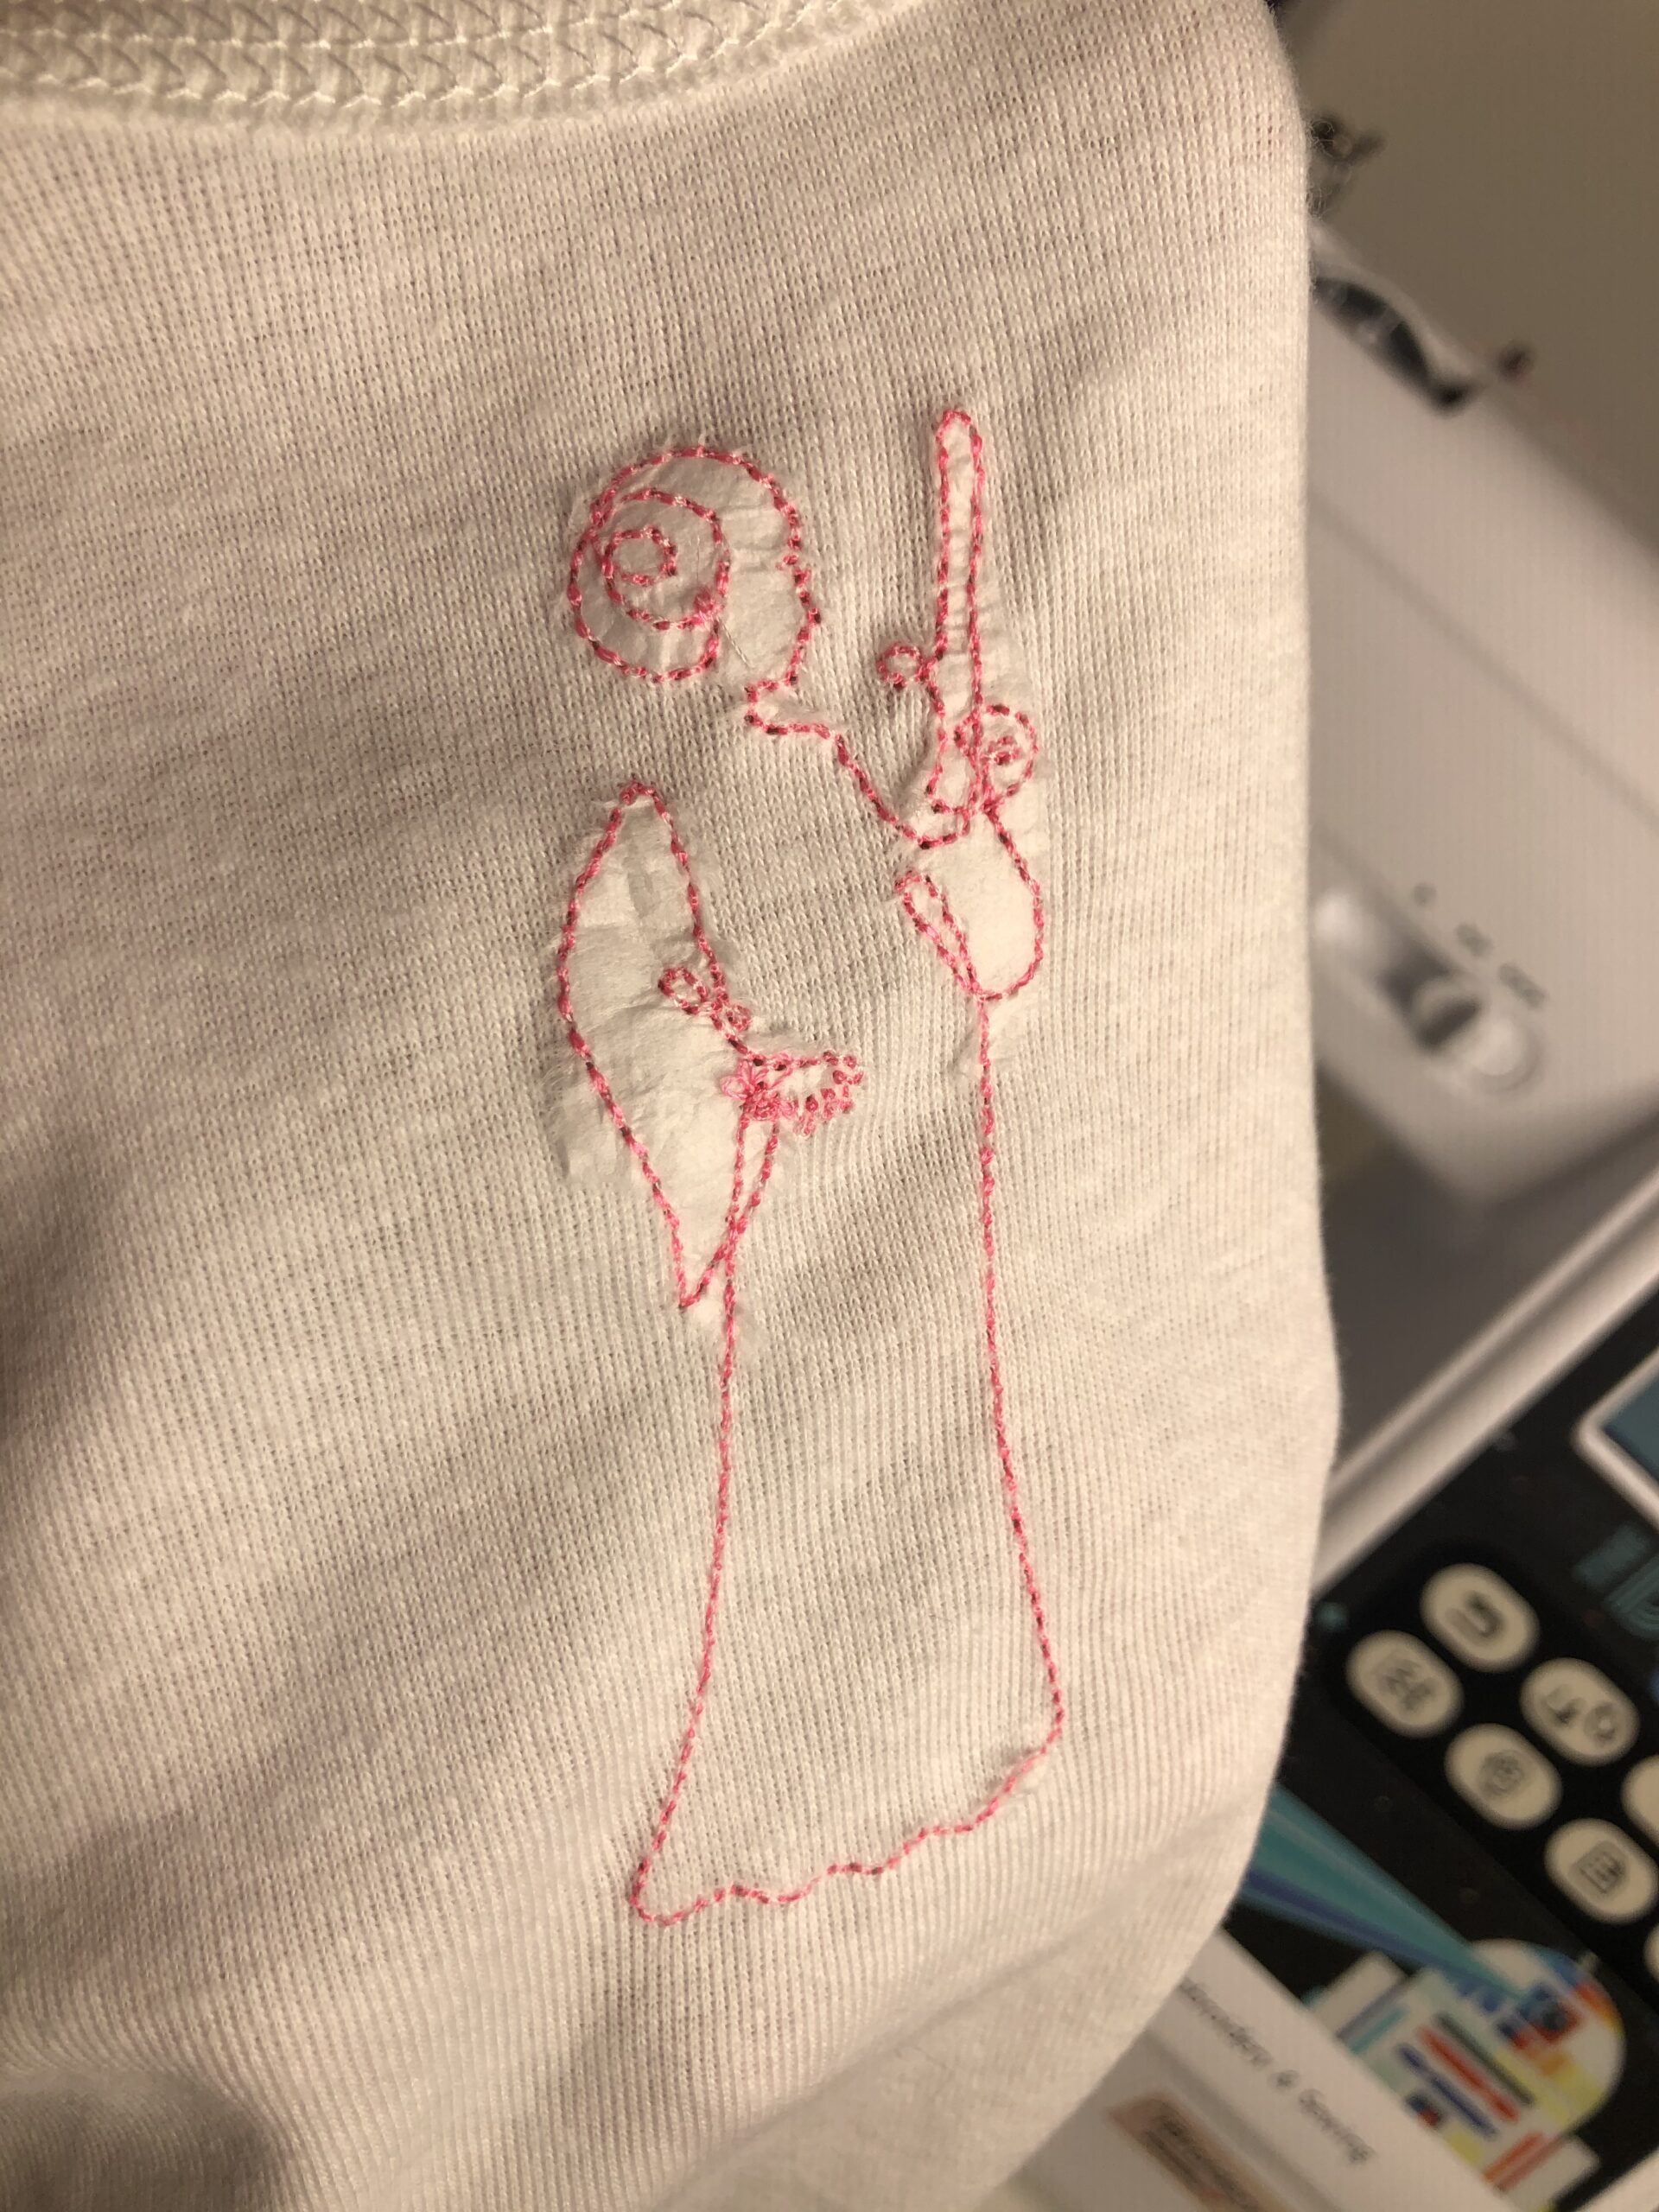 princess Leia embroidery